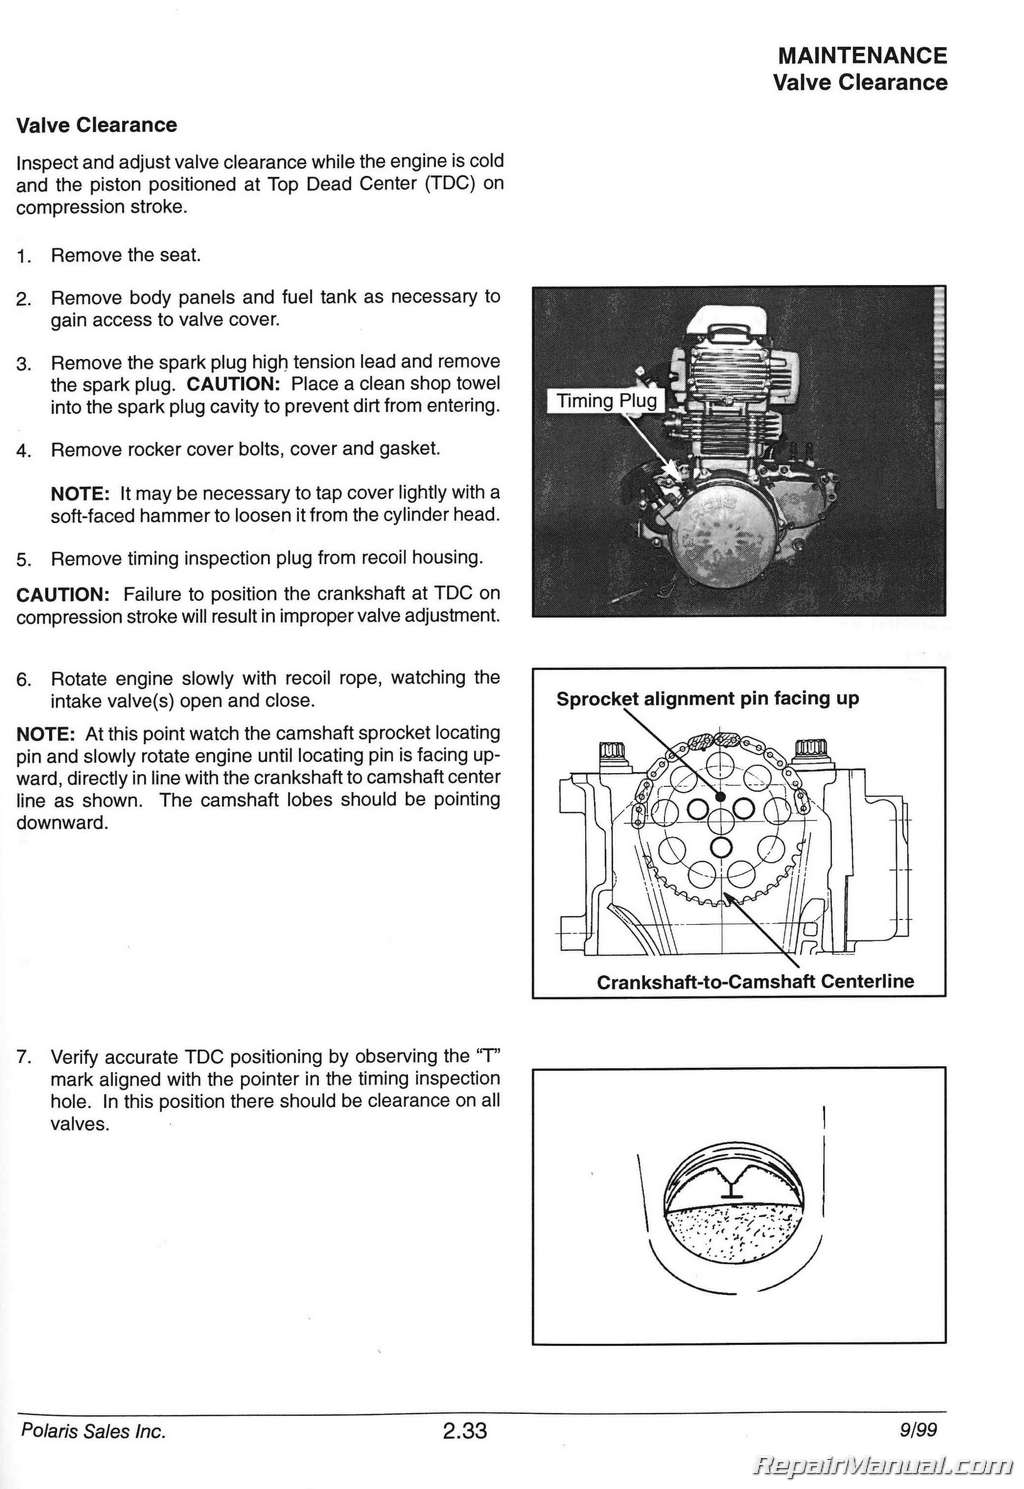 polaris hud instruction manual